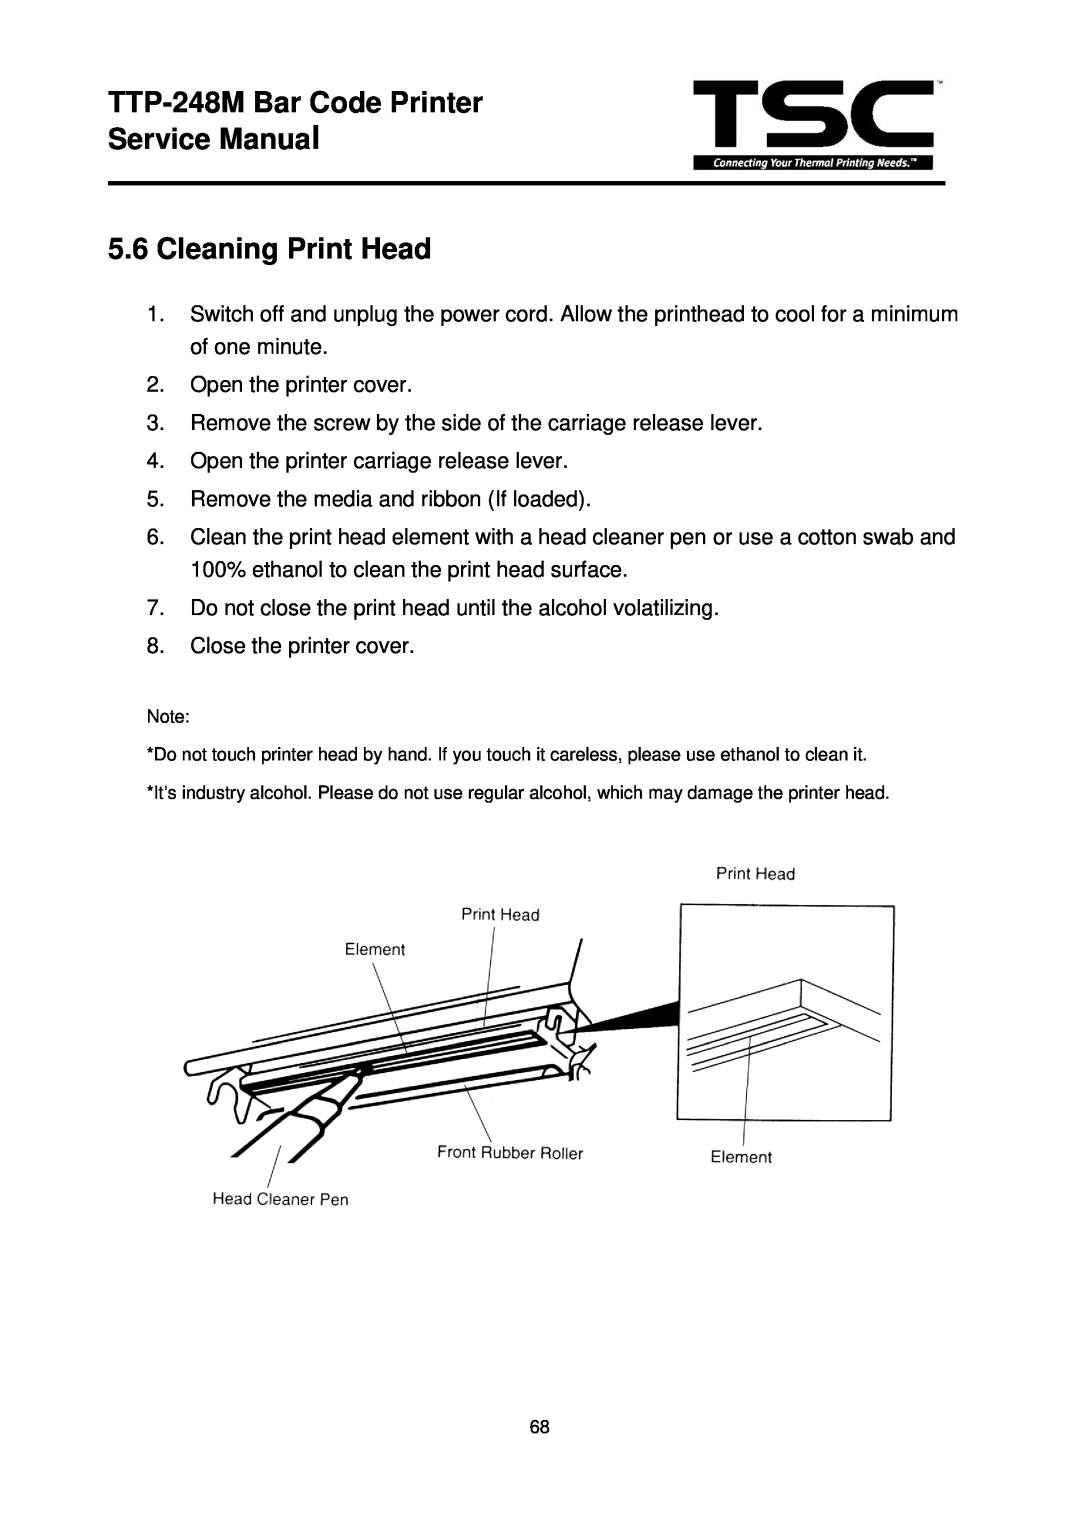 The Speaker Company TTP 248M service manual TTP-248M Bar Code Printer Service Manual 5.6 Cleaning Print Head 